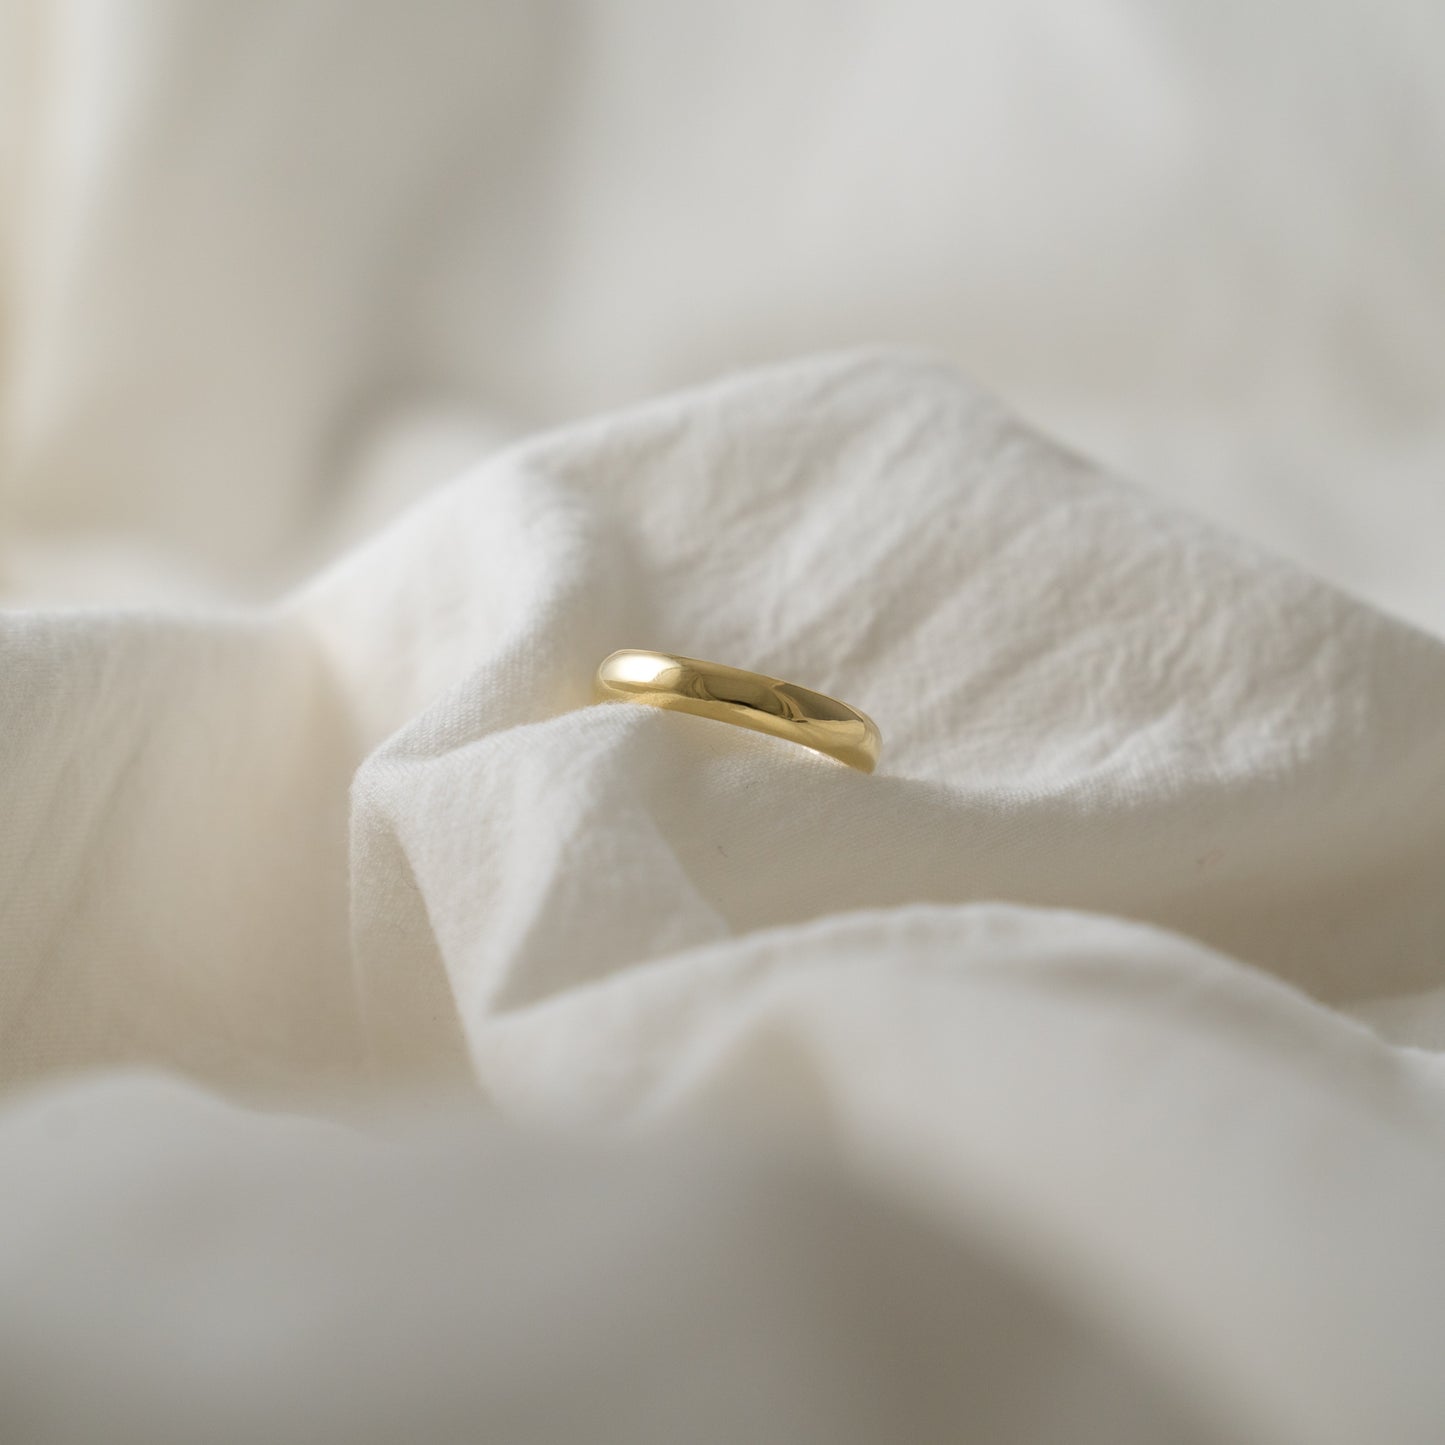 Minimalist, dual-metal, 18k white and yellow wedding ring band